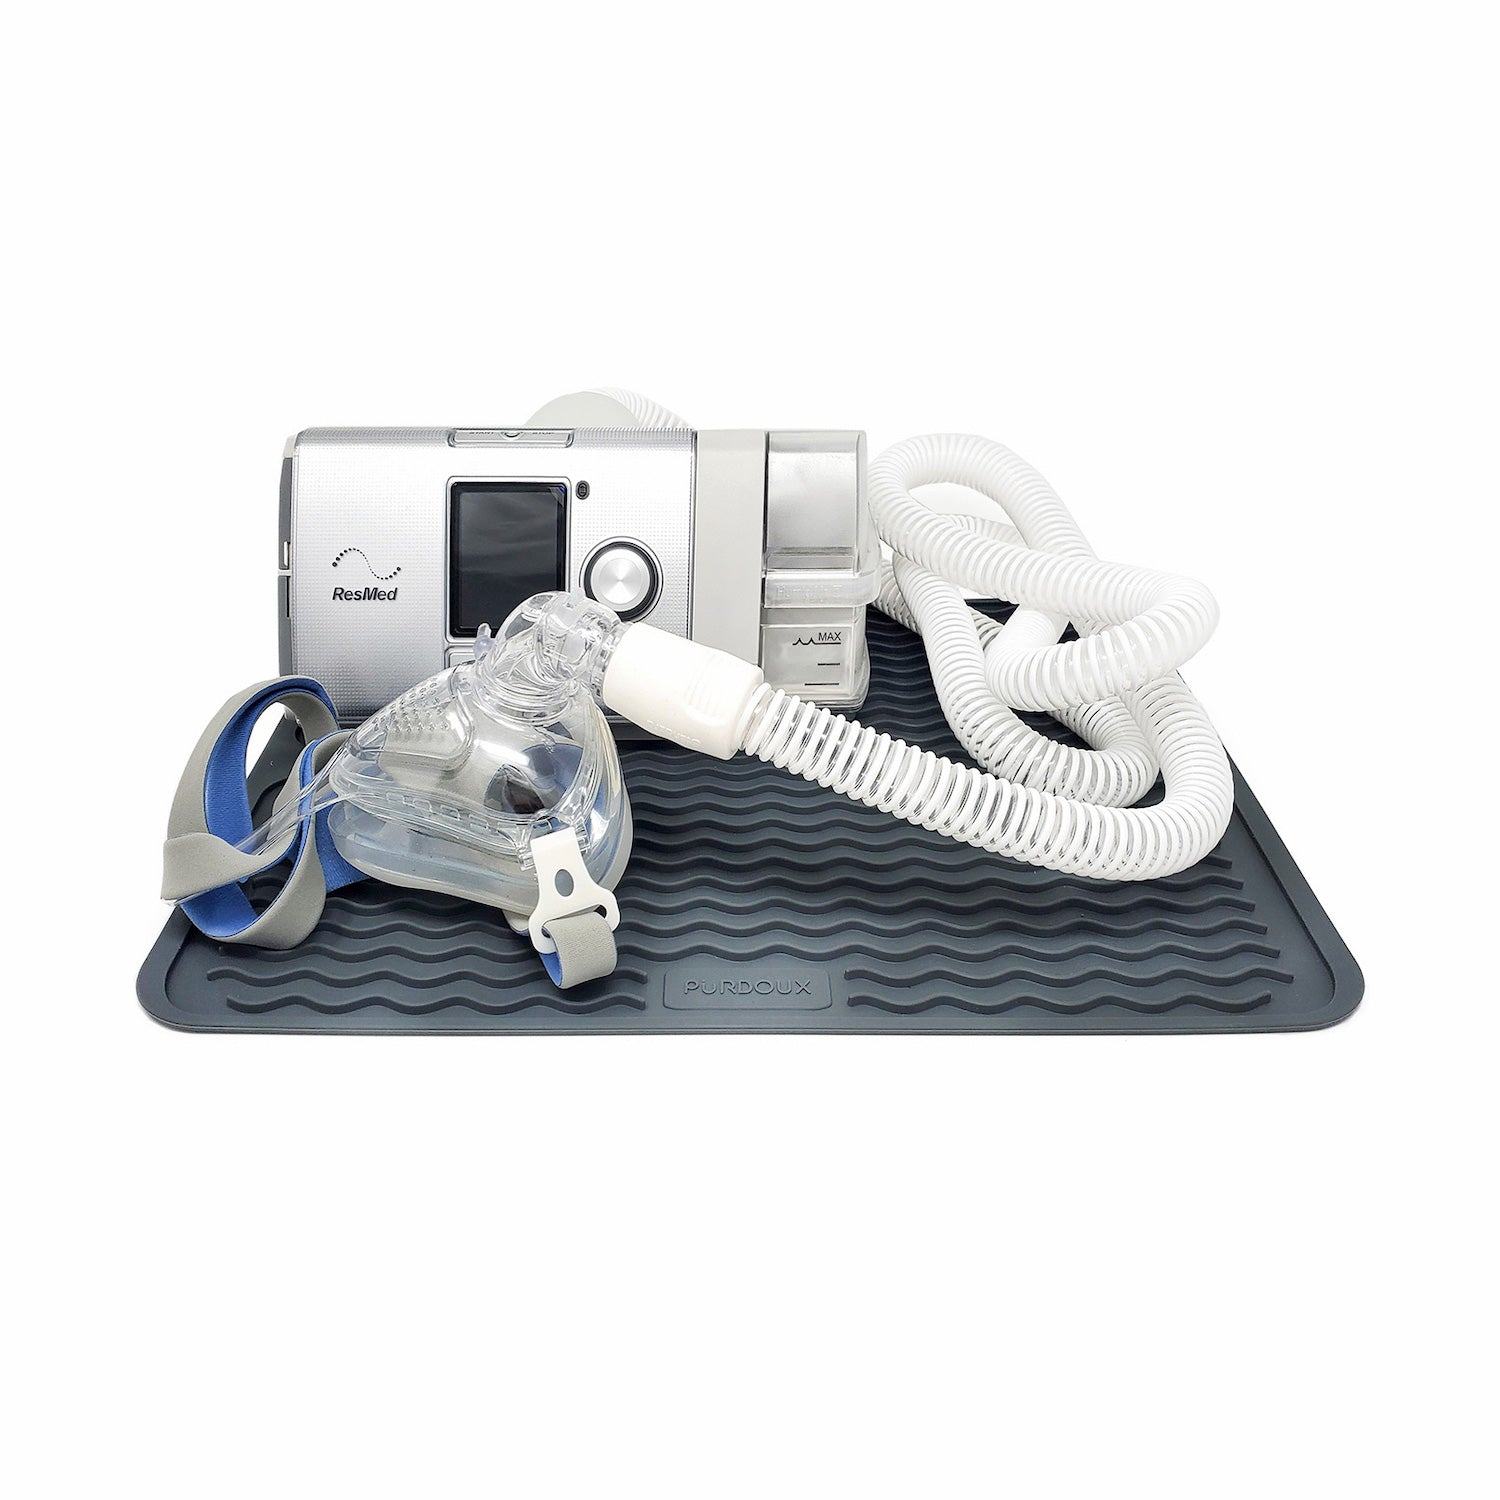 PURDOUX CPAP dust Cover & Protector Mat - PAP machine, mask, tubing